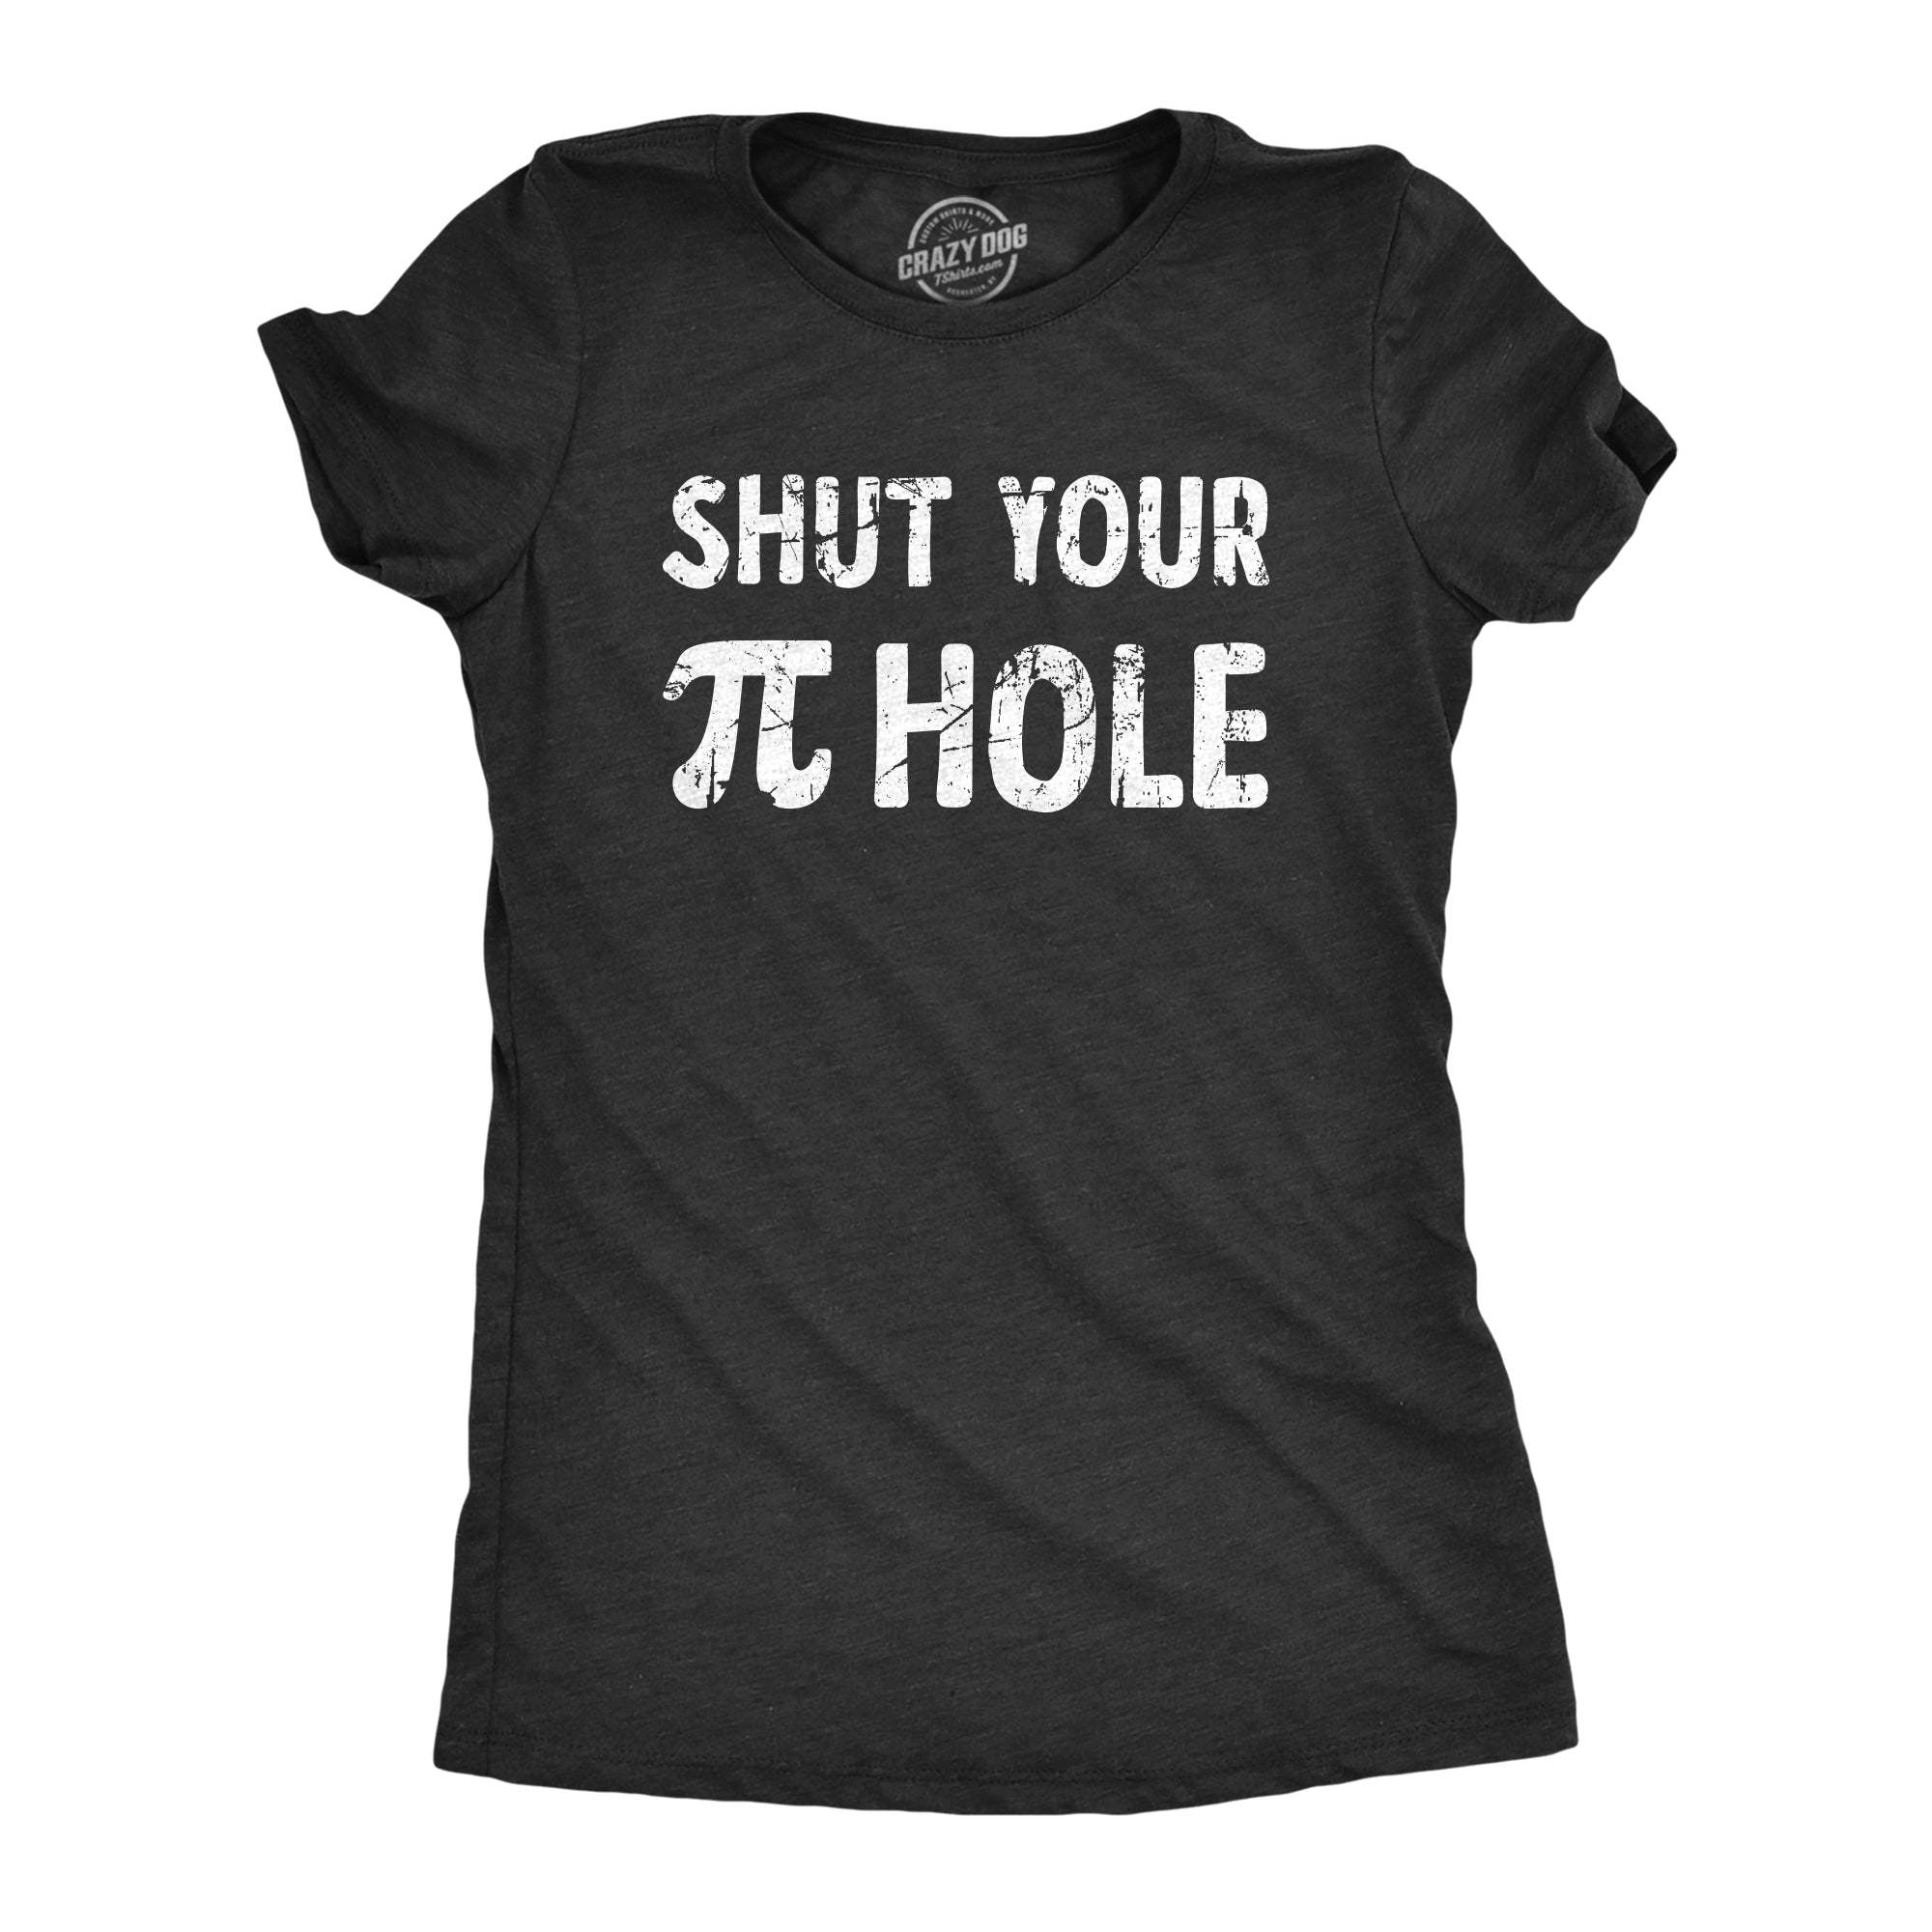 Funny Heather Black - PiHOLE Shut Your Pi Hole Womens T Shirt Nerdy Sarcastic Nerdy Tee